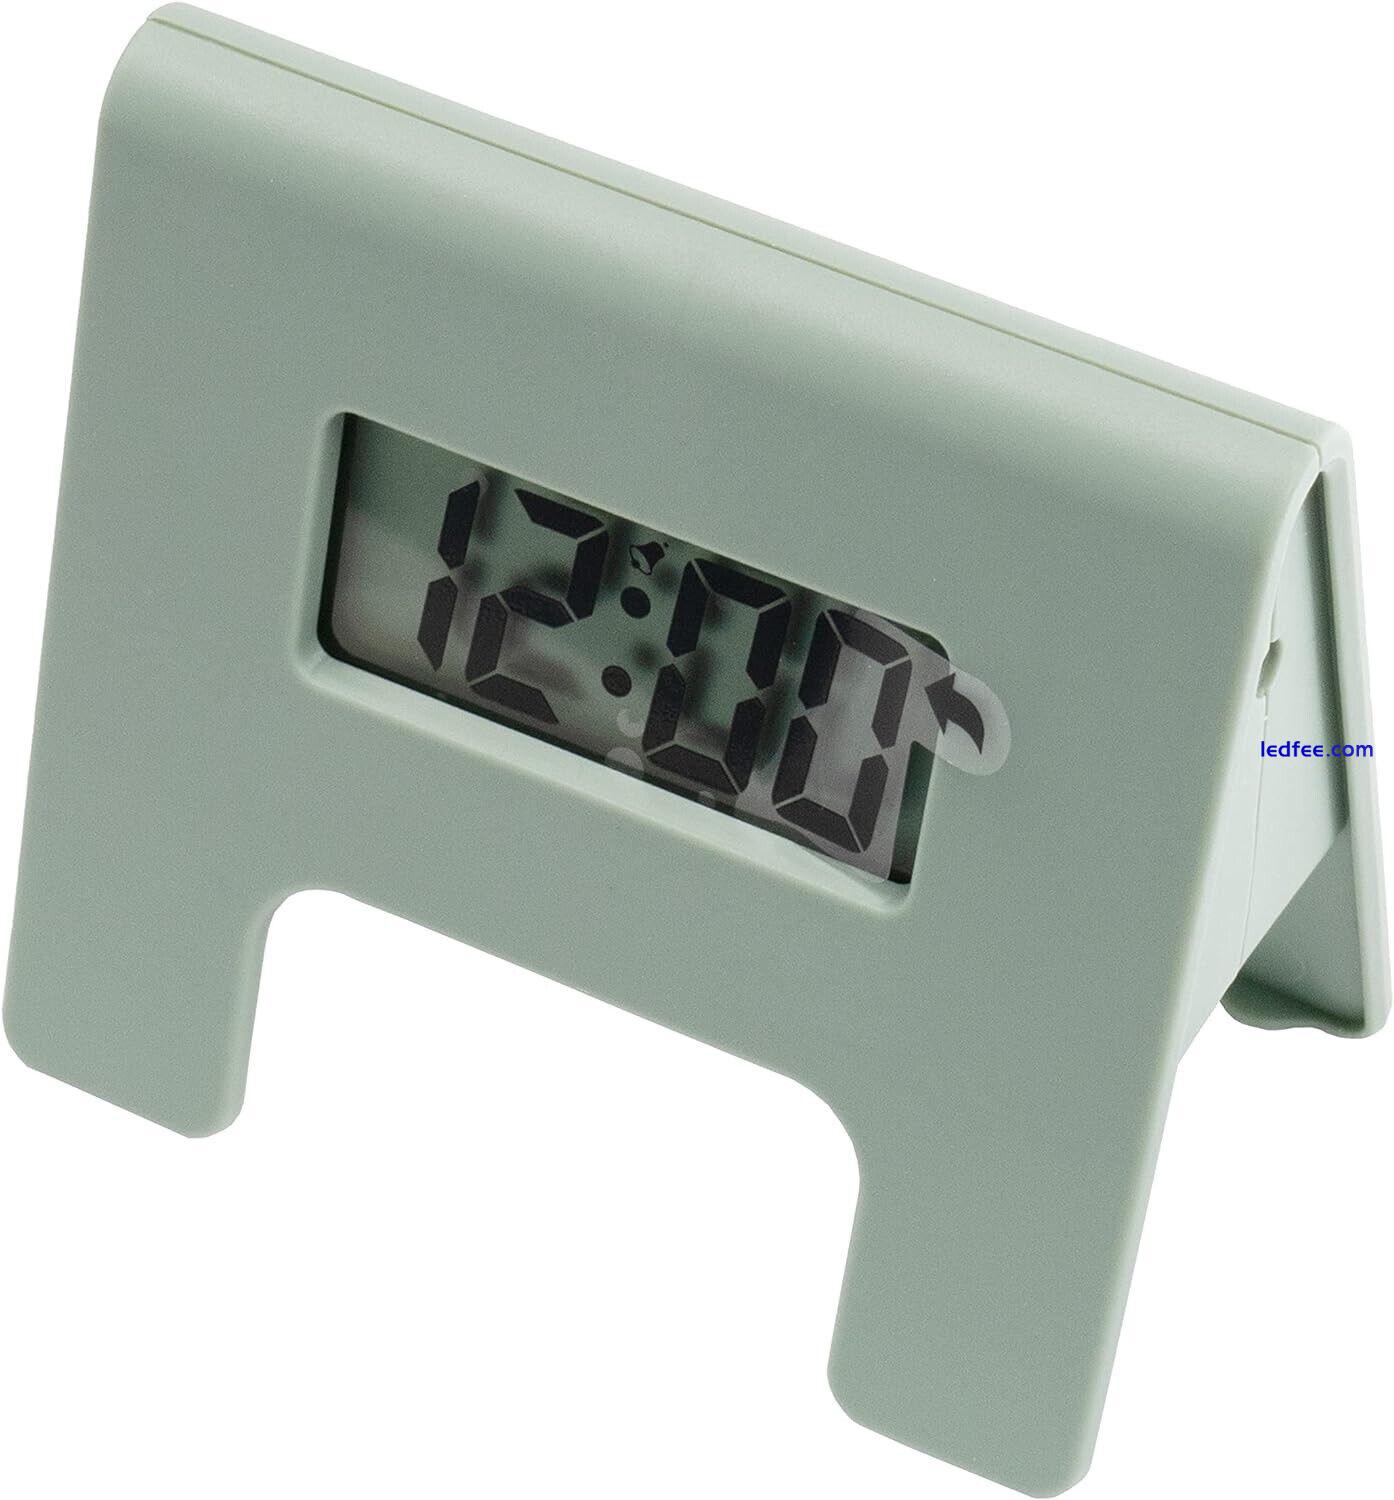 Digital Alarm Clock Bedside Snooze LED Display Clocks Wake Up on Time New UK 5 